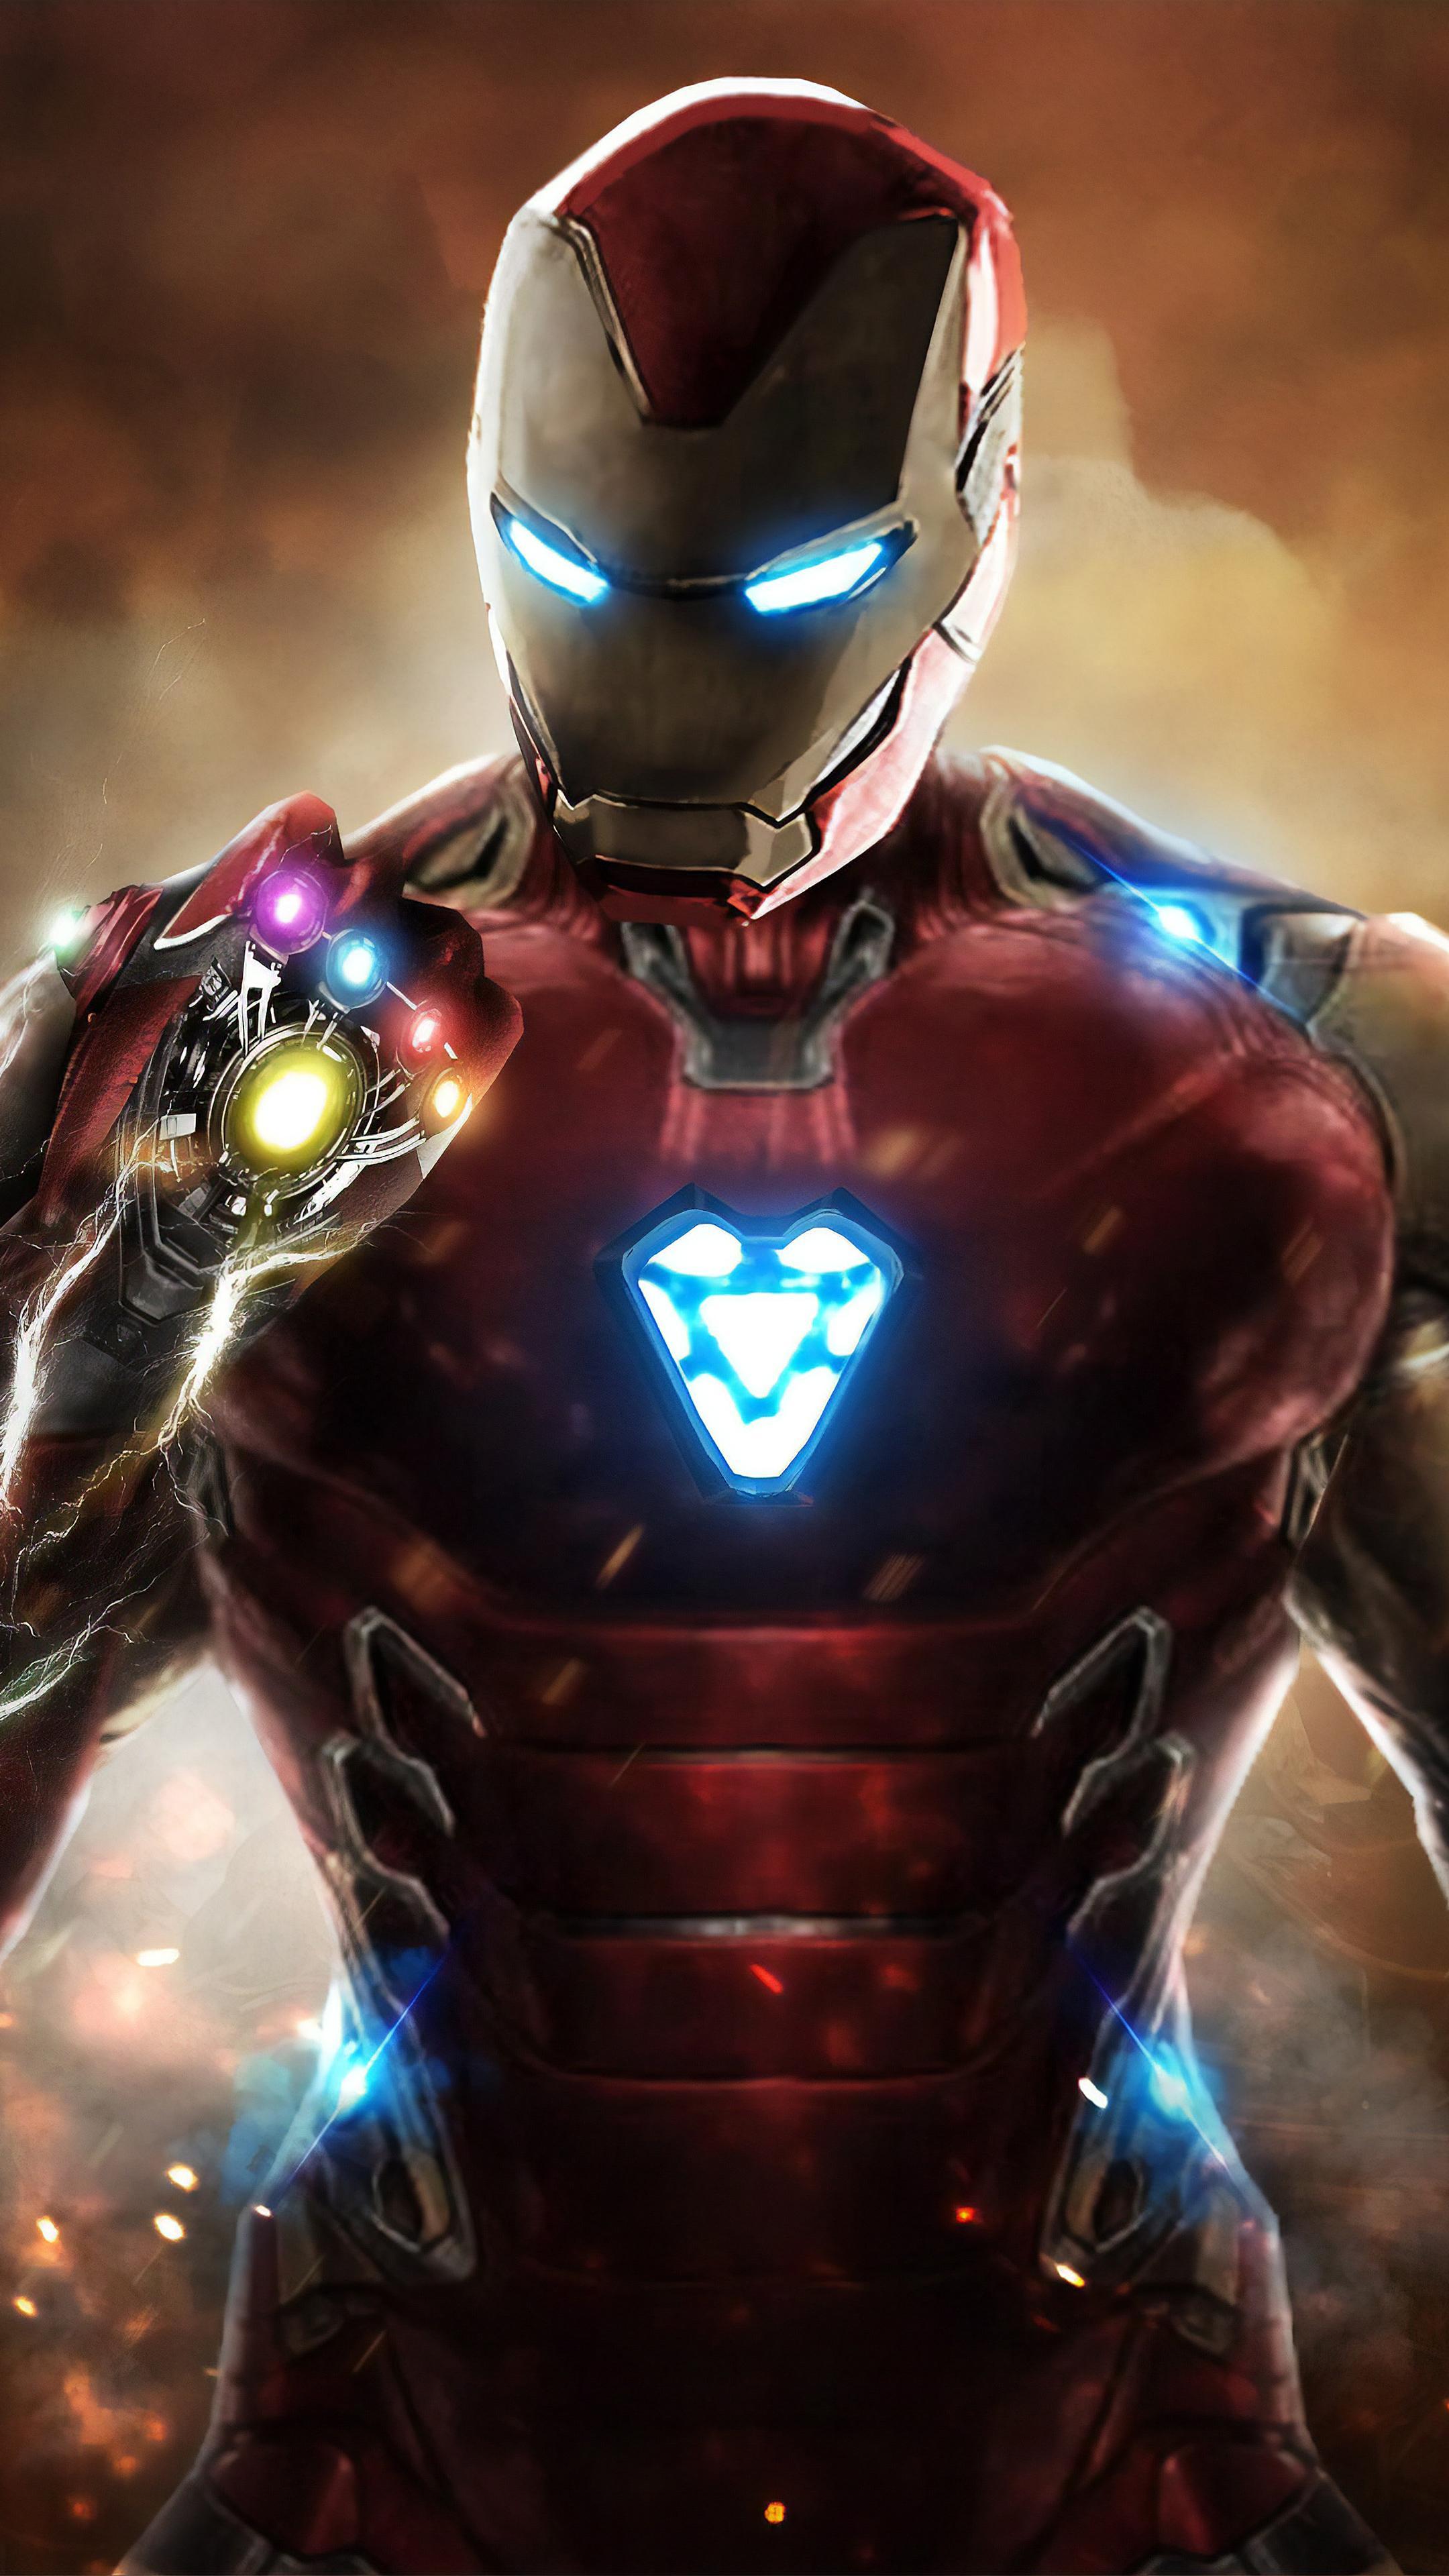 Iron Man Infinity Gauntlet Avengers Endgame Sony Xperia X